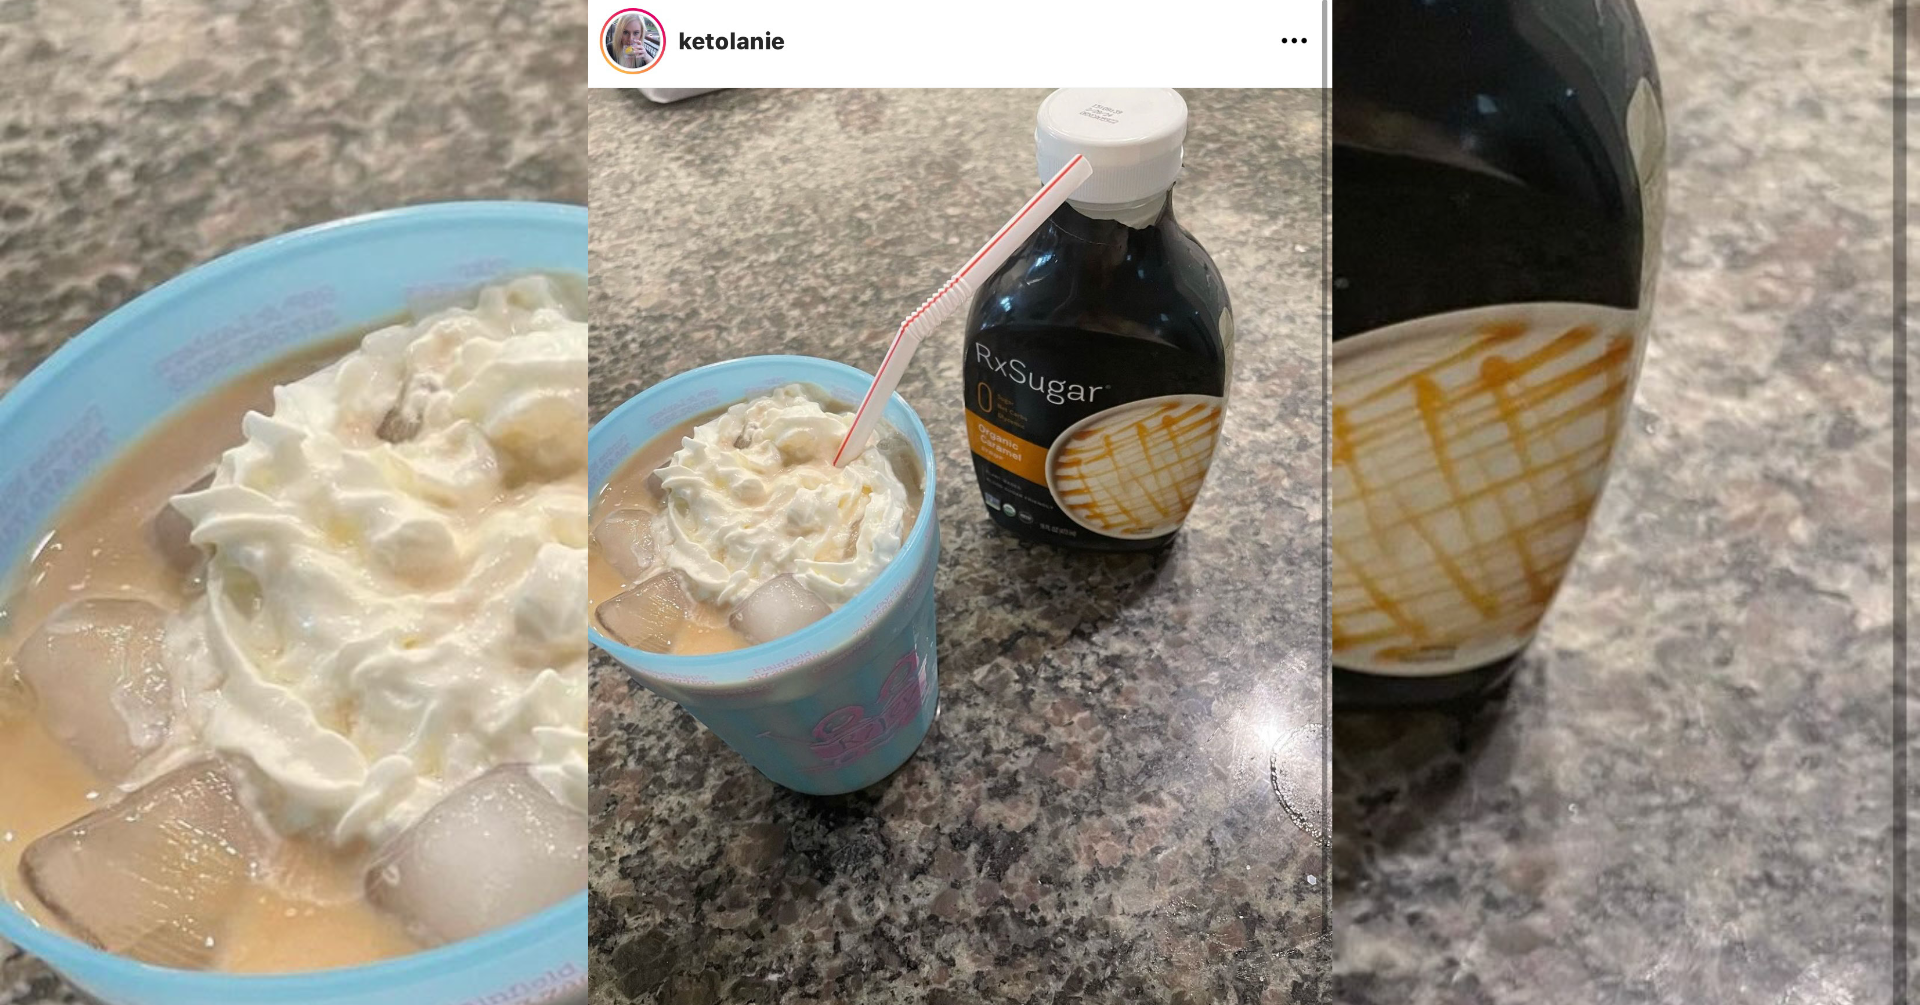 Keto Lanie Using Her RxSugar Caramel In Her Morning Iced Coffee!